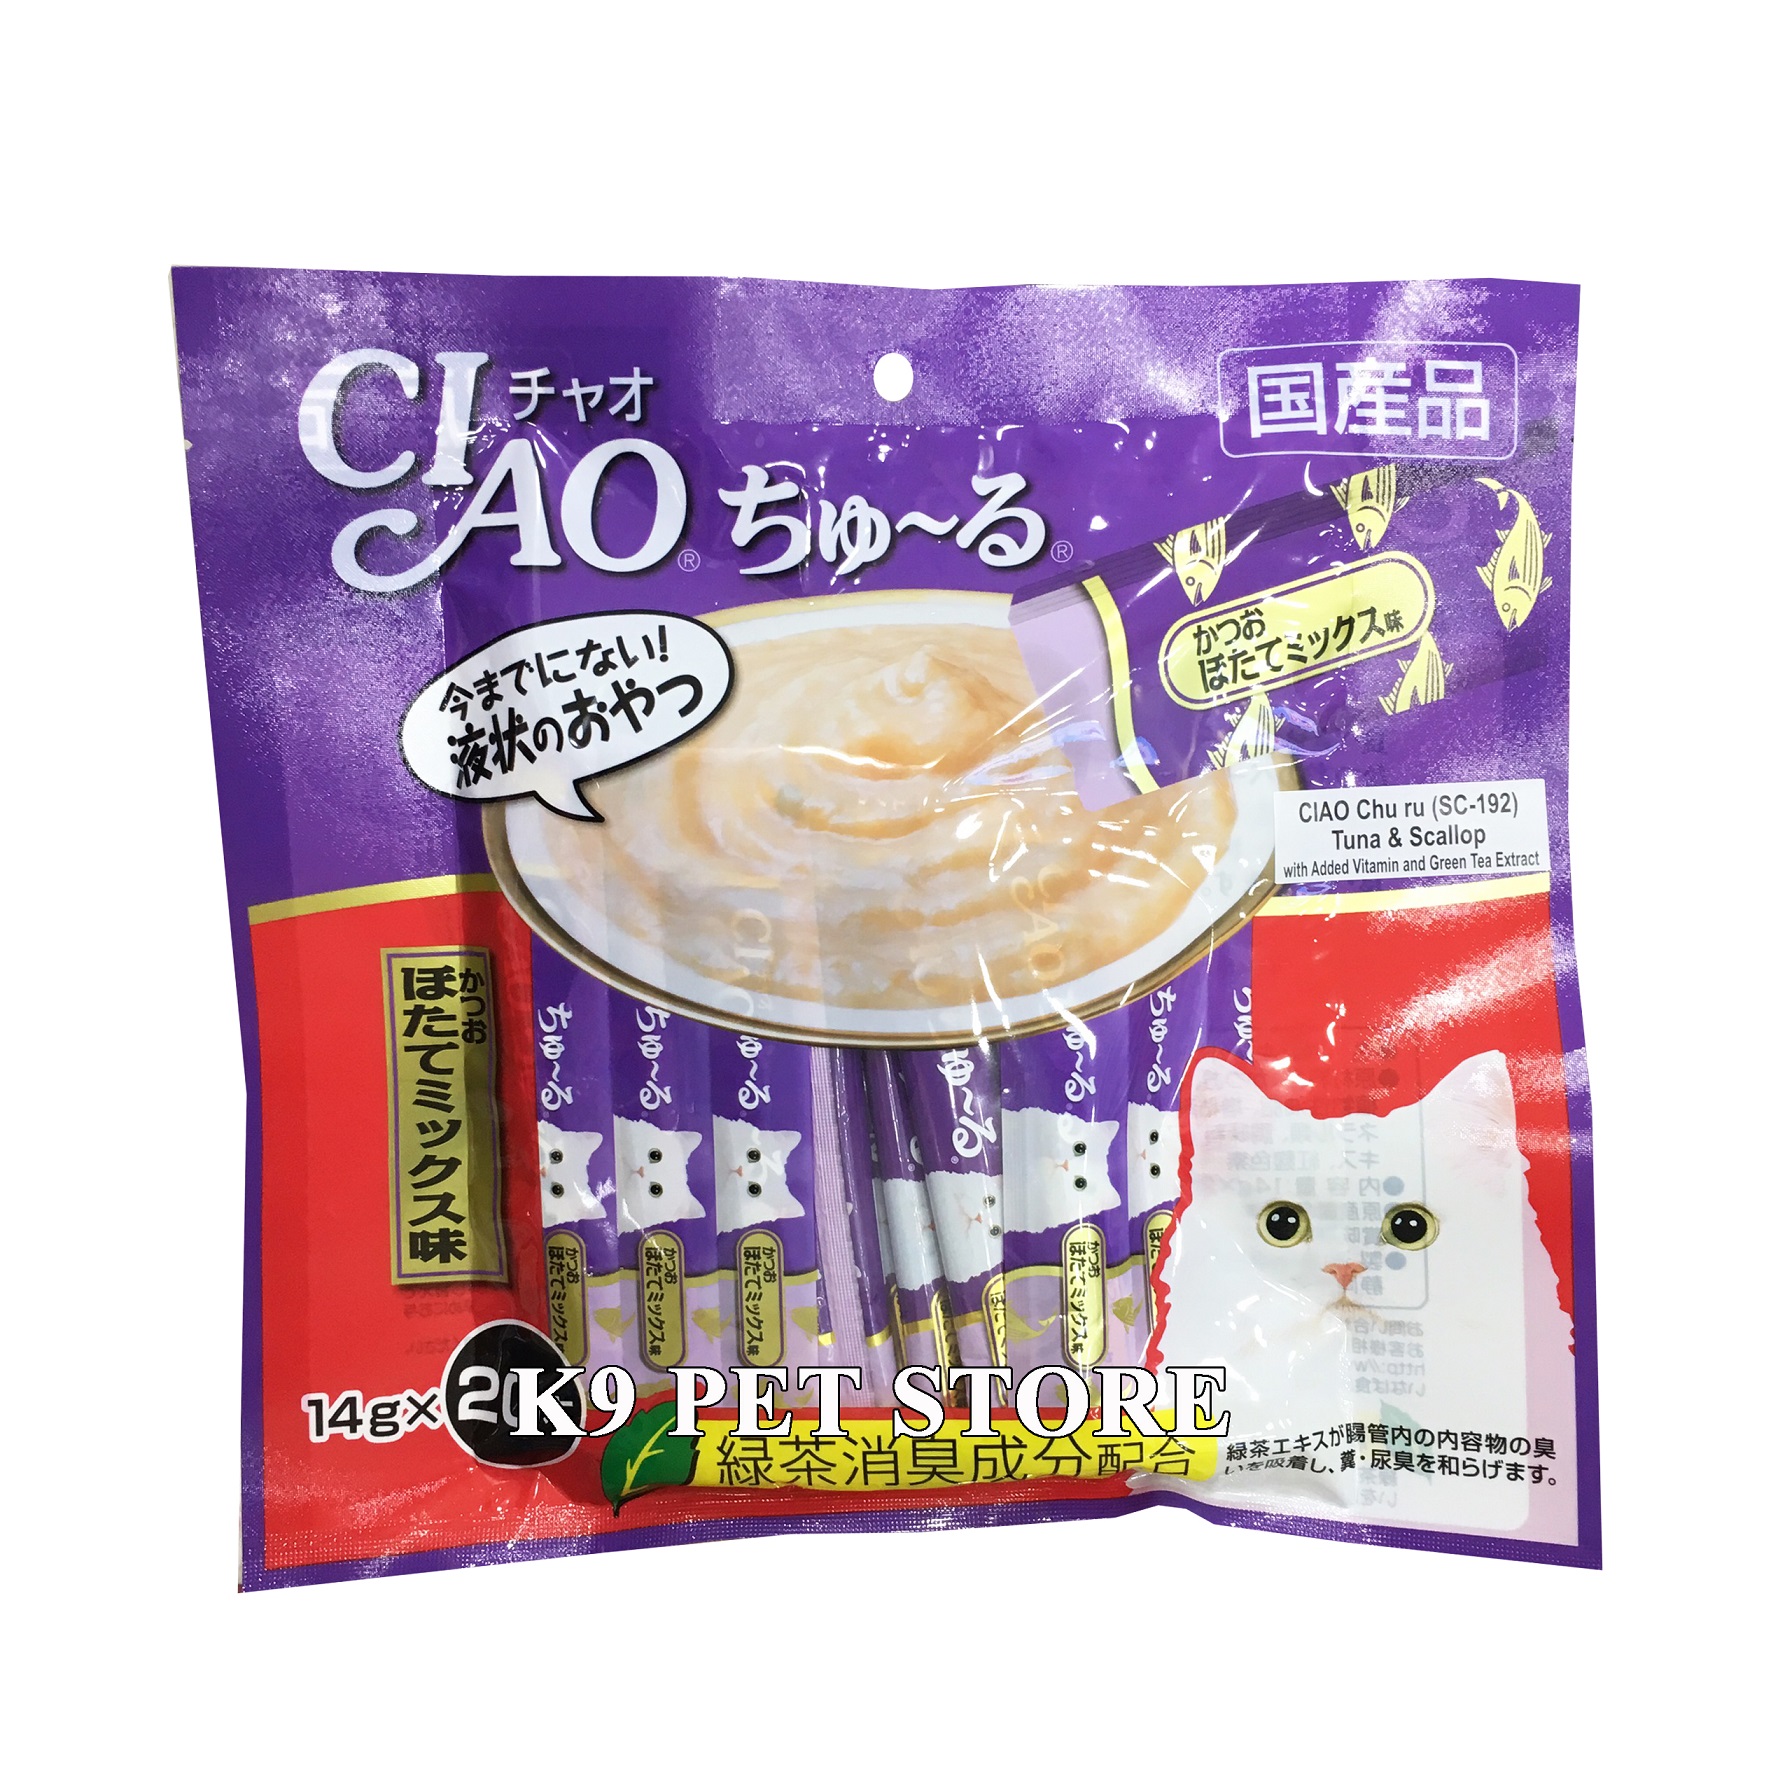 Ciao Churu Thái SC-192 cho mèo vị Tuna & Scallop  14g*20